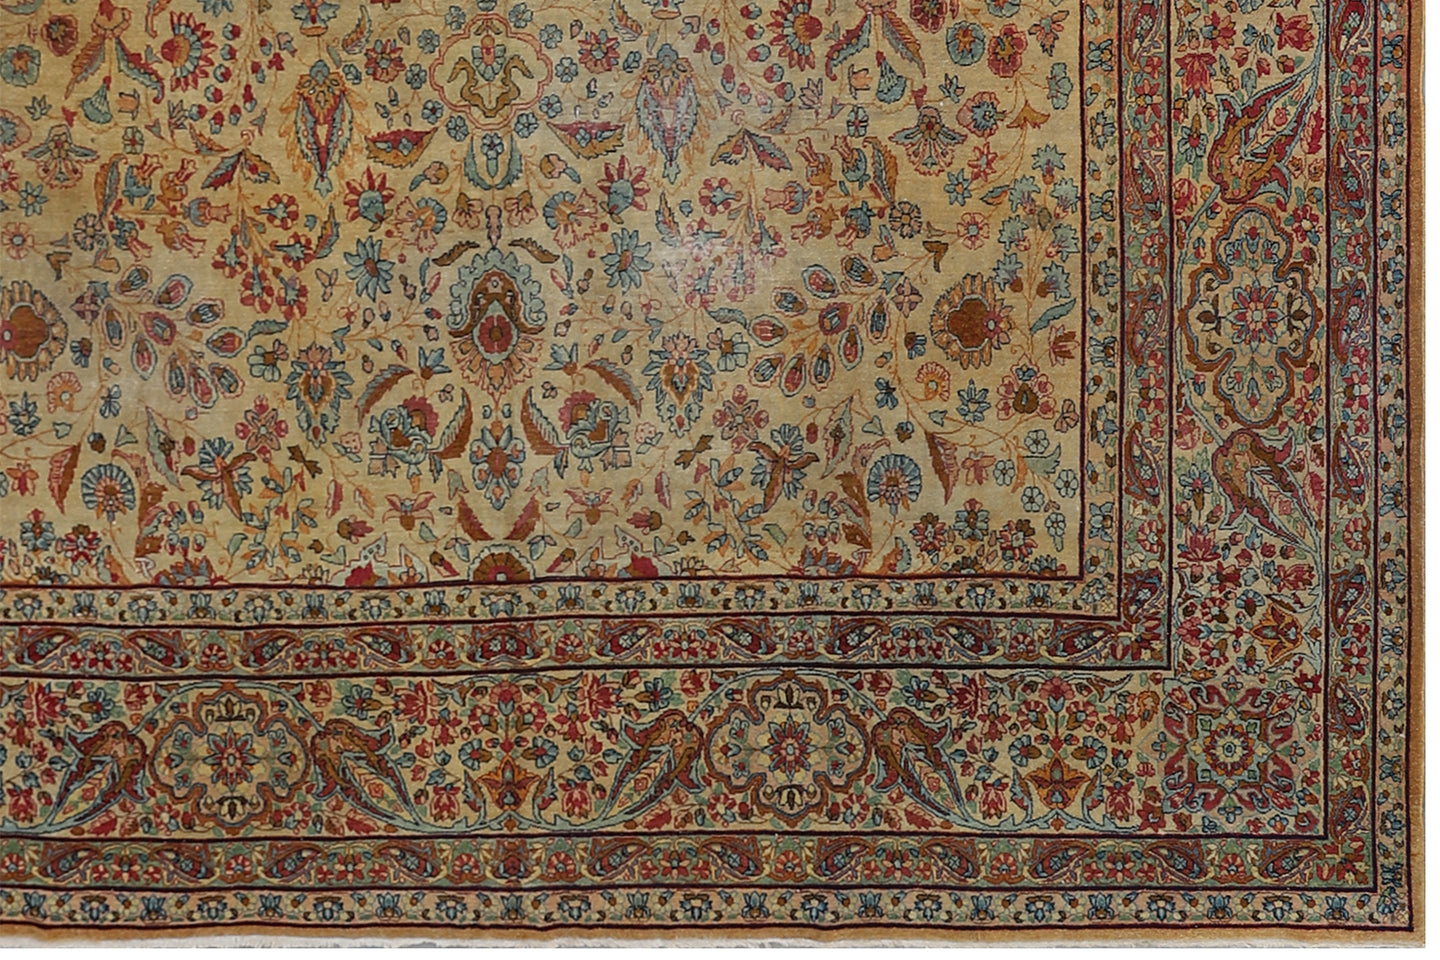 10'x16' Antique Gold Pink Blue Ivory Persian Kerman Rug